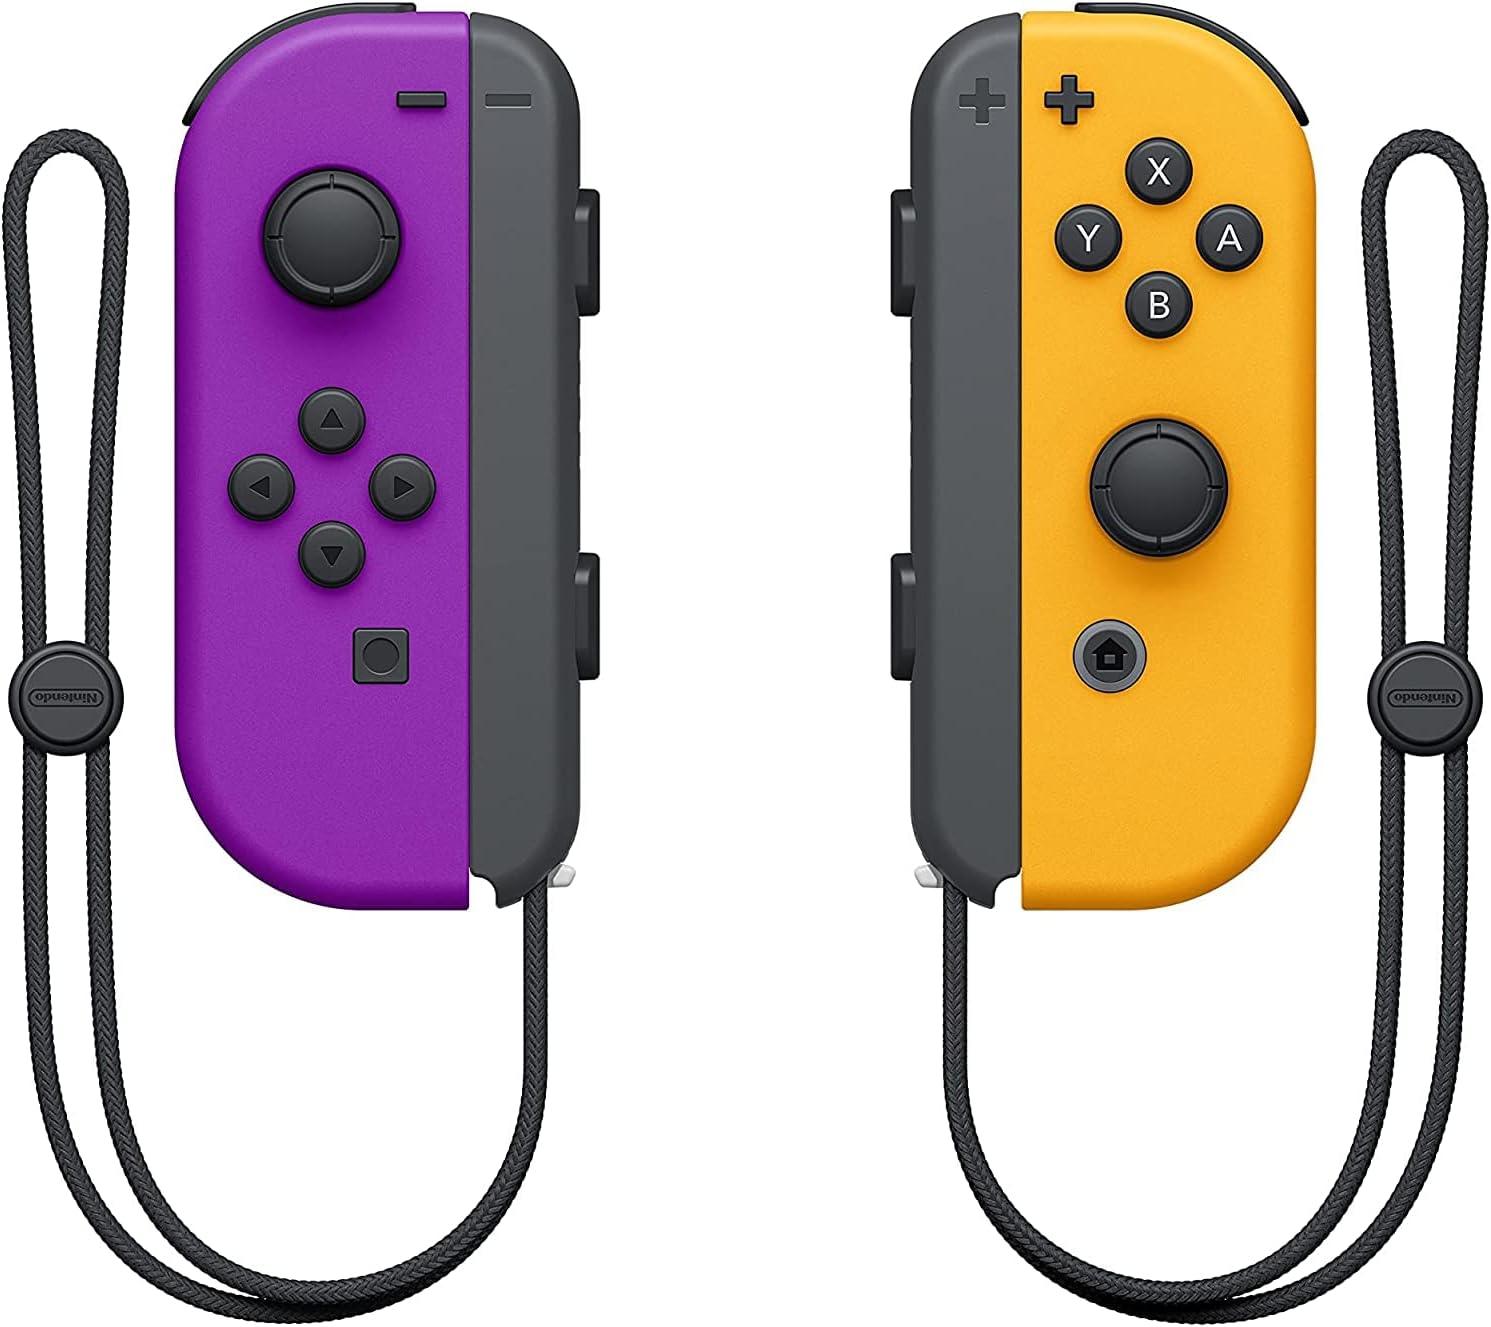 Nintendo Switch Joy-Con Pair (Neon Purple/Neon Orange) - Want a New Gadget